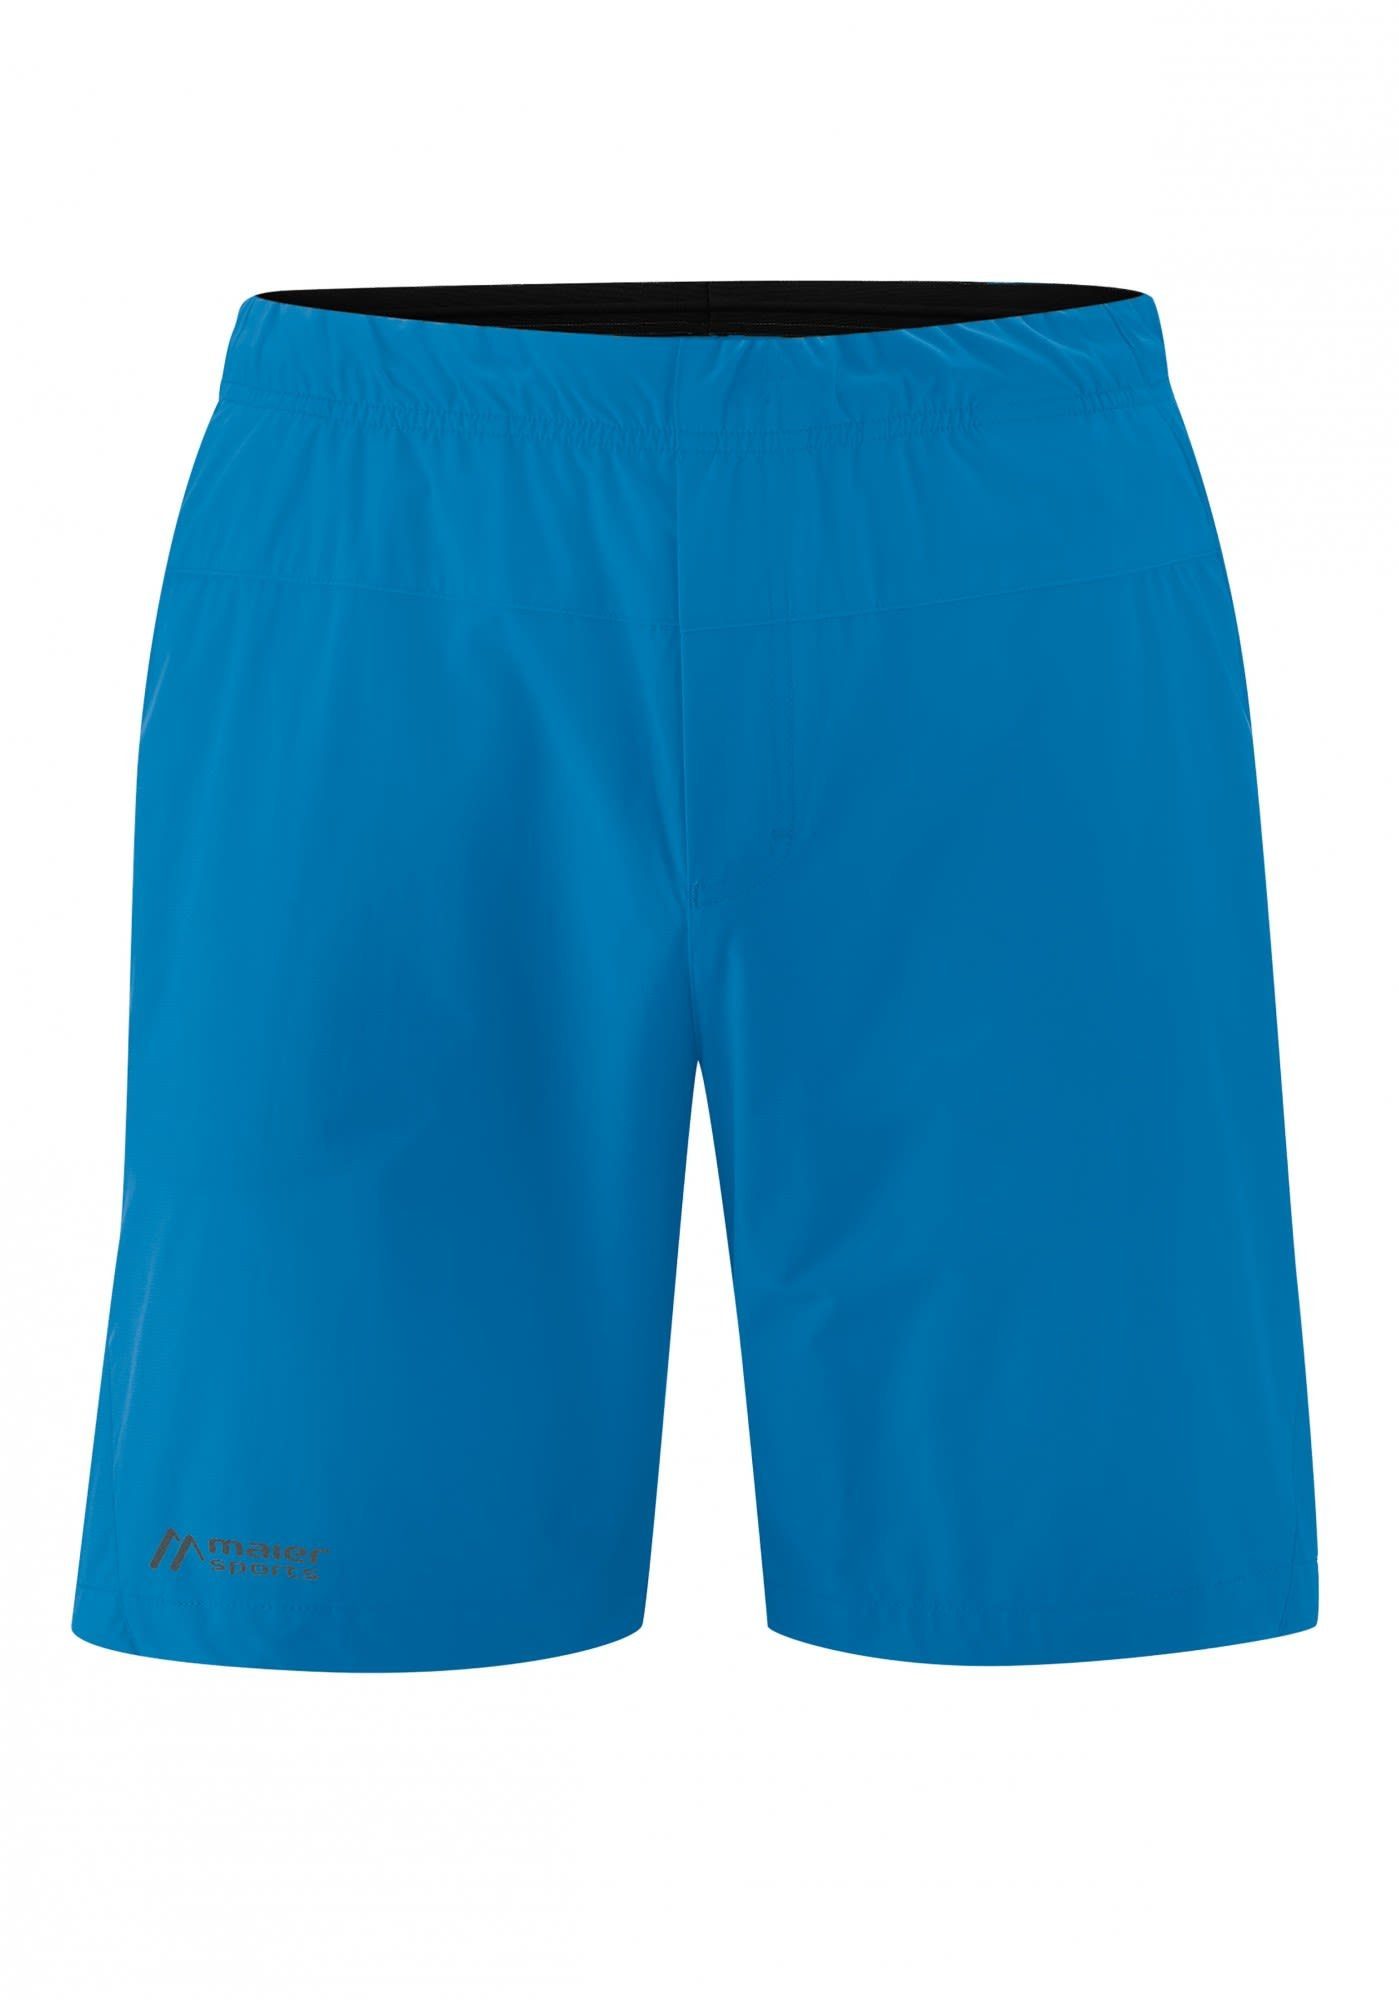 Maier Sports Strandshorts Blue Herren Short Sports Fortunit Imperial Shorts Maier M